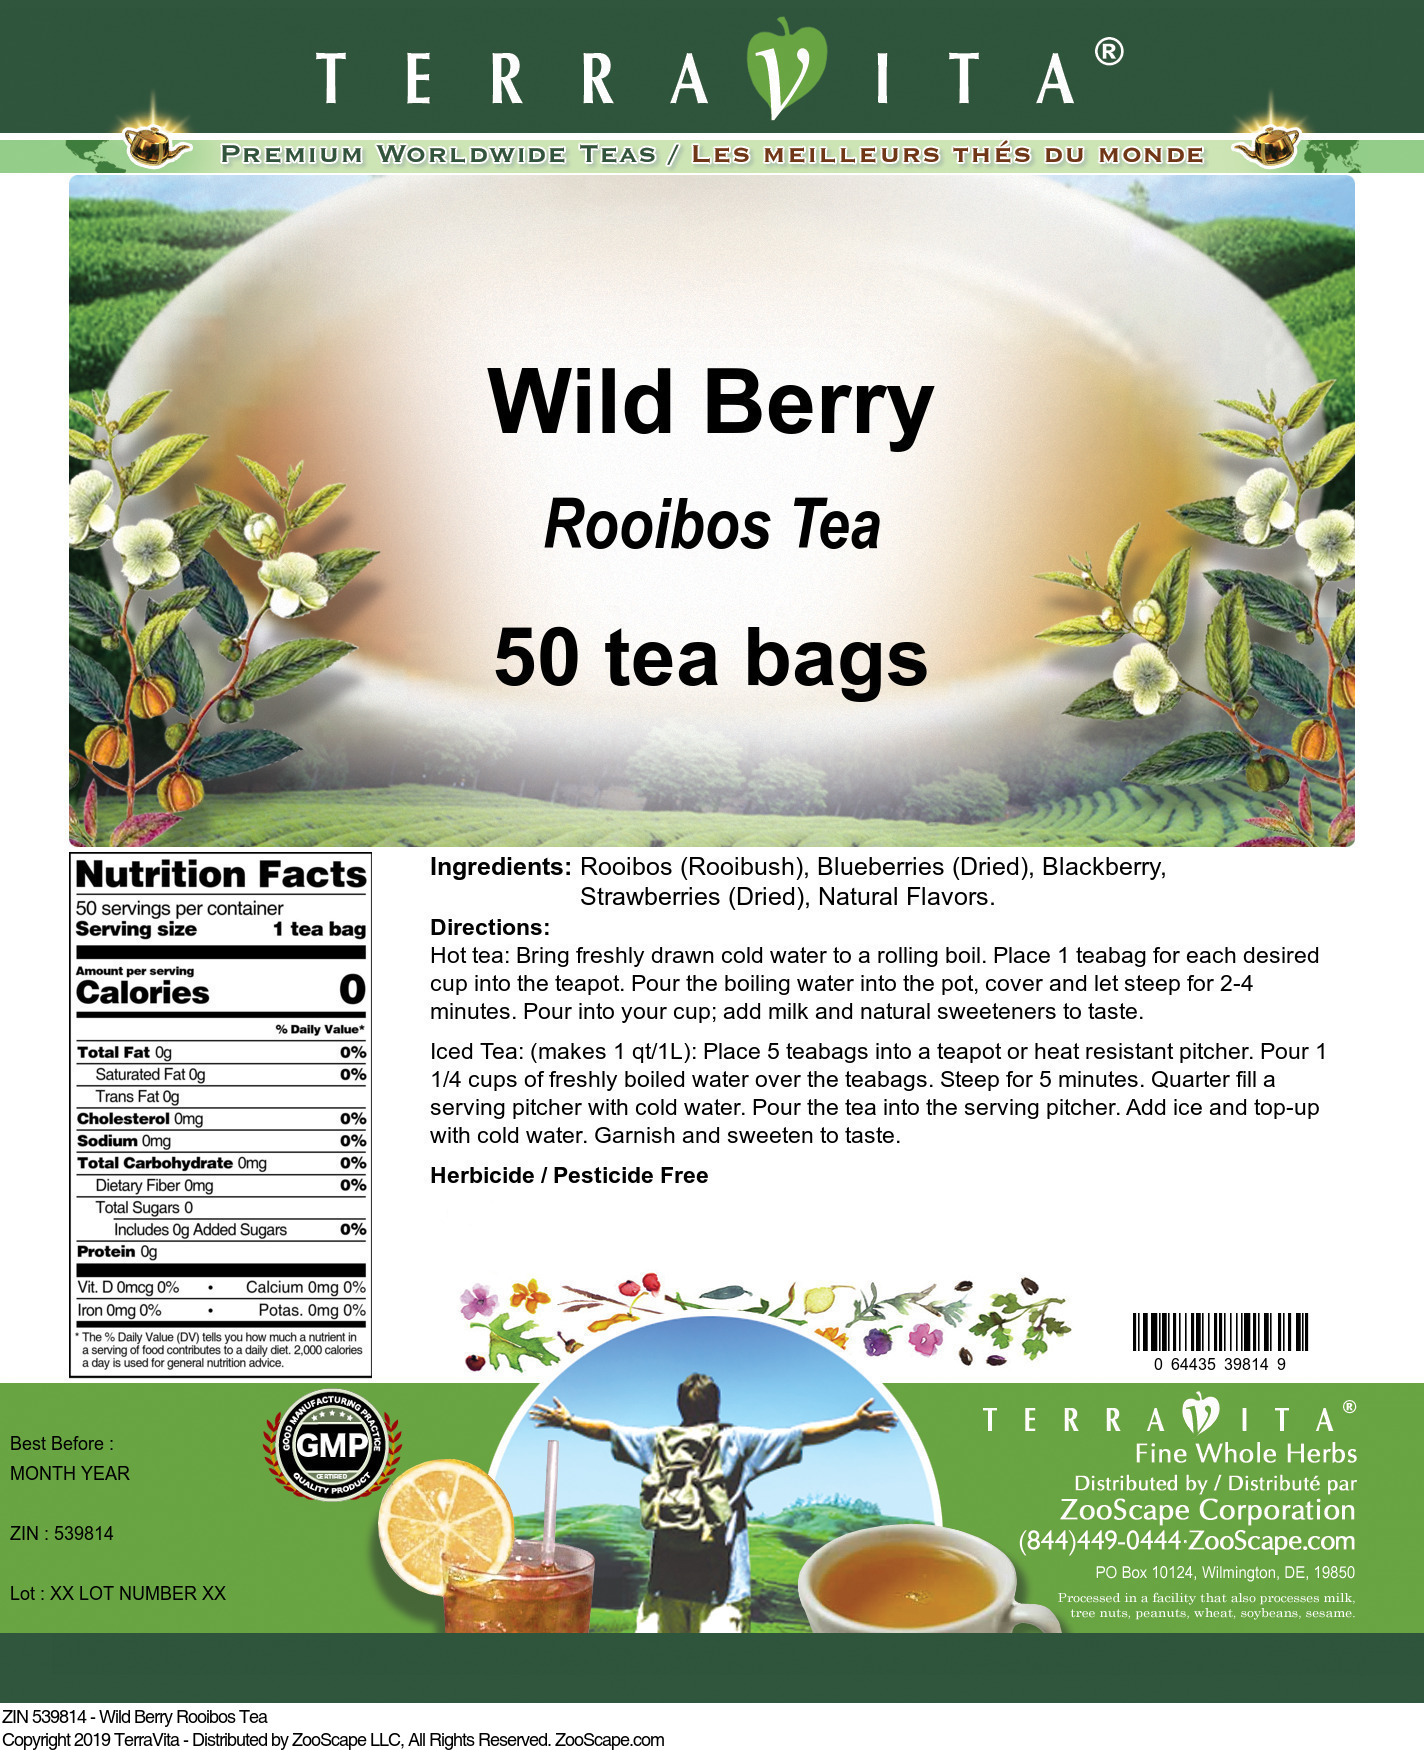 Wild Berry Rooibos Tea - Label